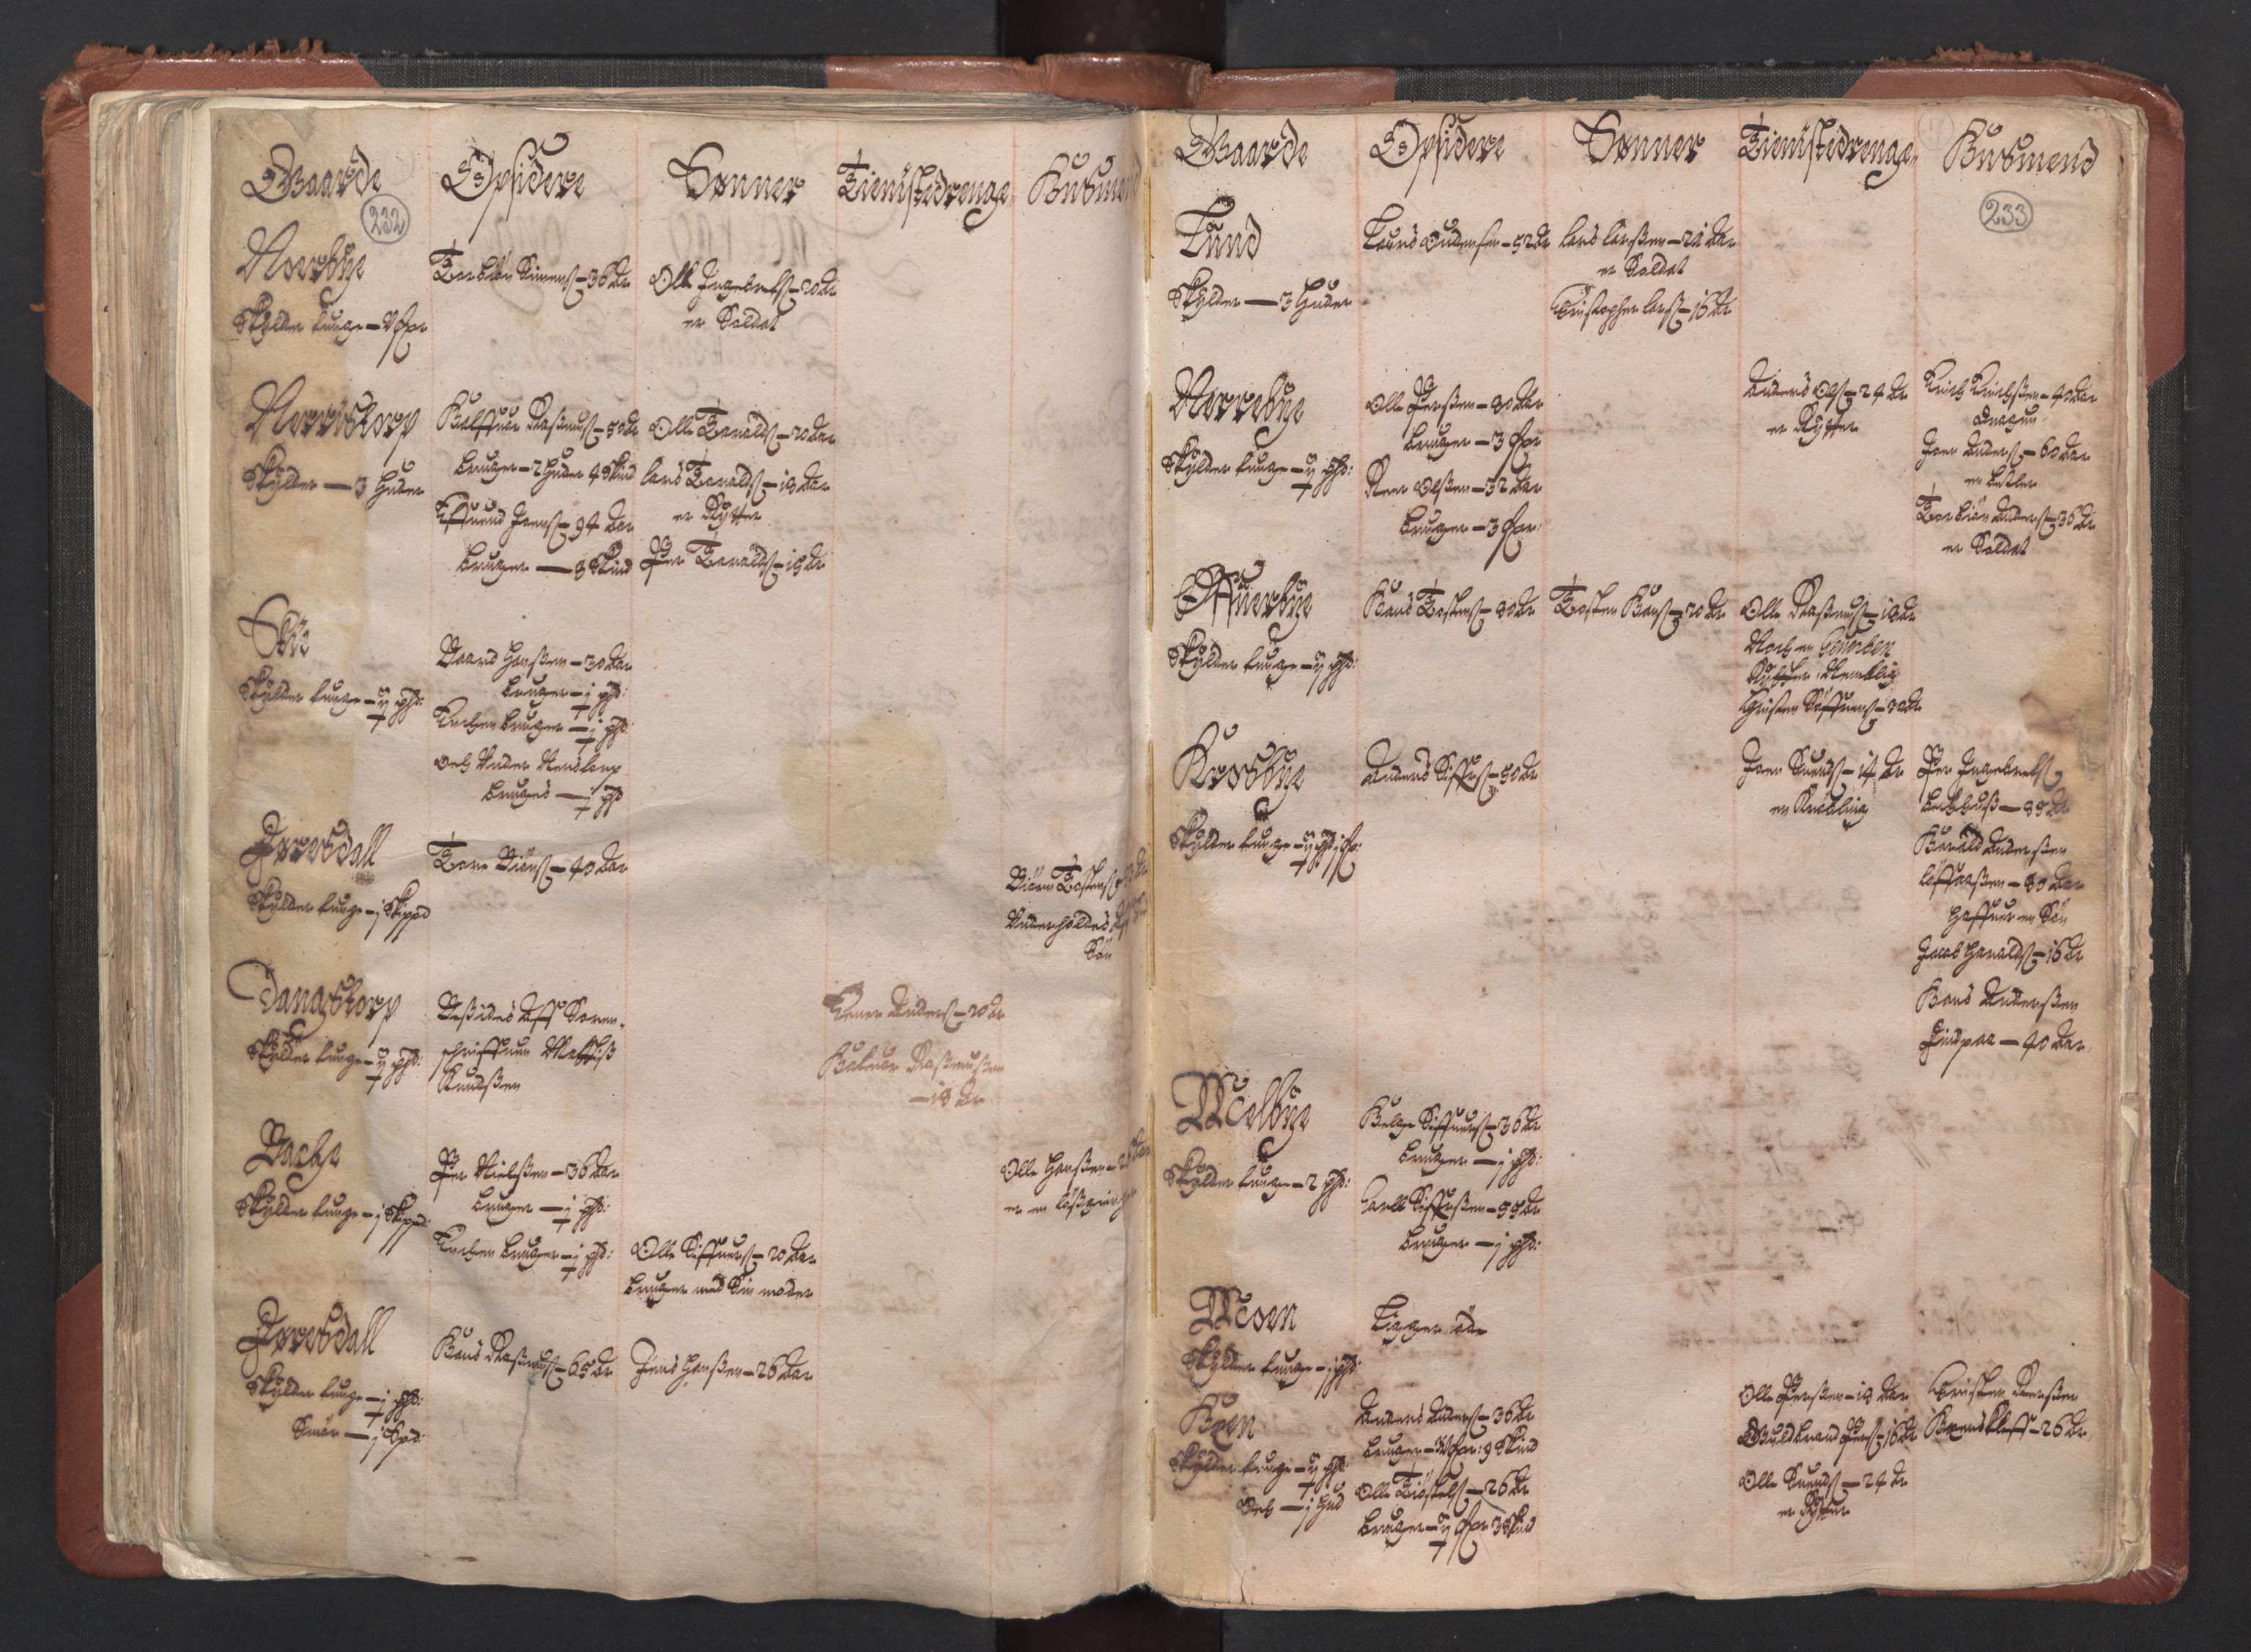 RA, Fogdenes og sorenskrivernes manntall 1664-1666, nr. 1: Fogderier (len og skipreider) i nåværende Østfold fylke, 1664, s. 232-233